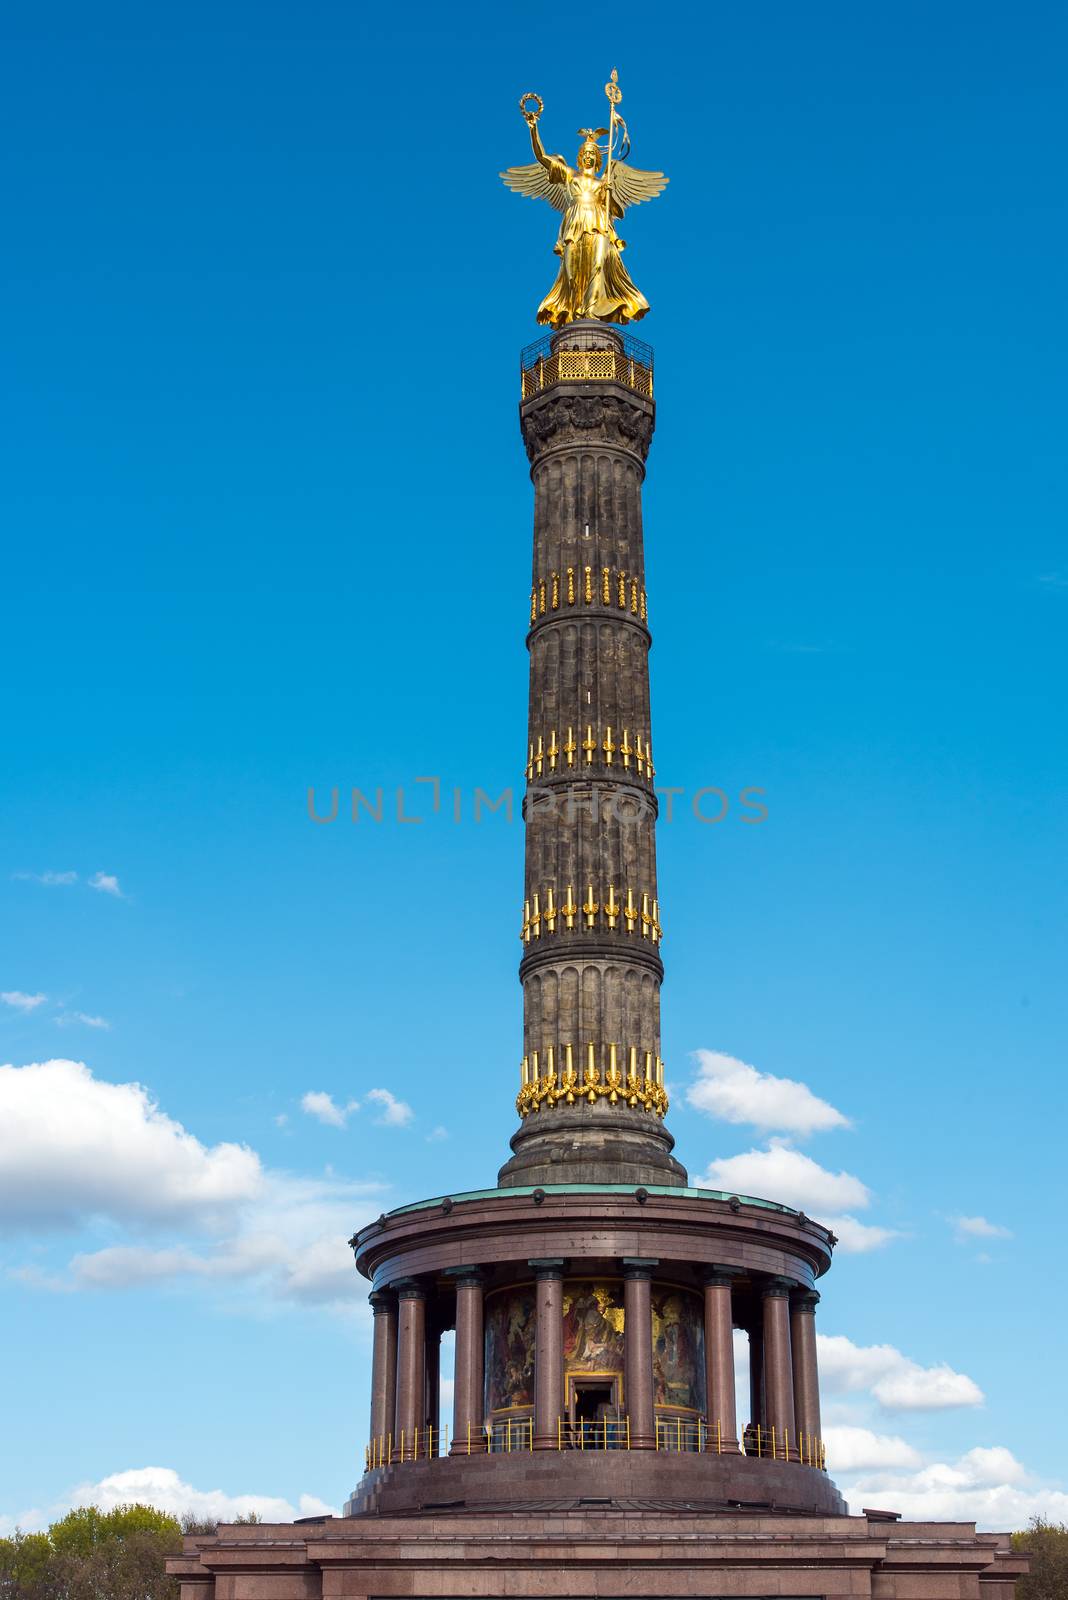 The Statue of victory in Berlin by elxeneize